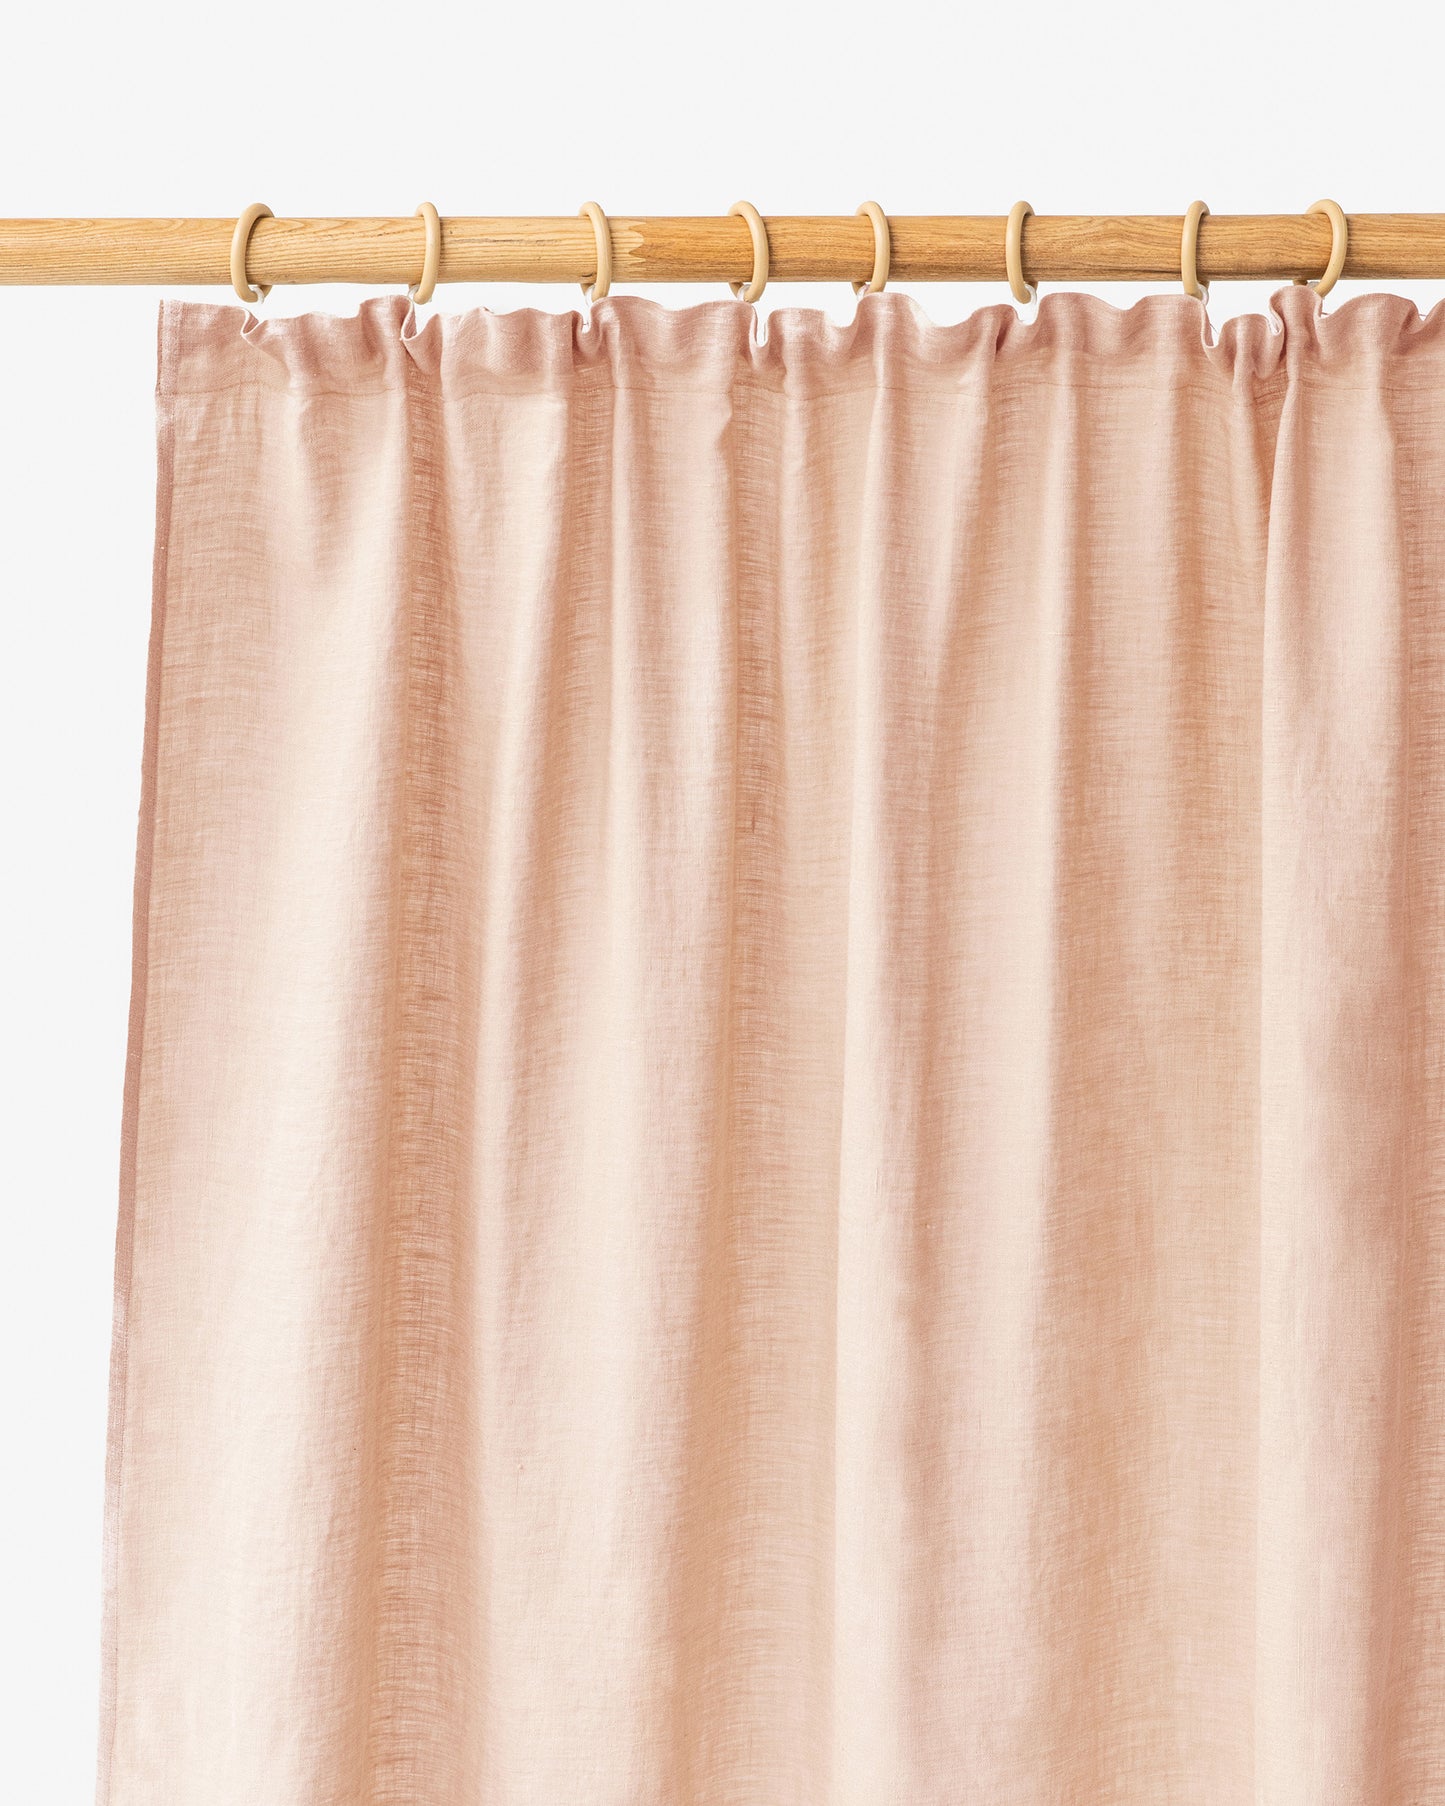 Pencil pleat linen curtain panel (1 pcs) in Peach - MagicLinen